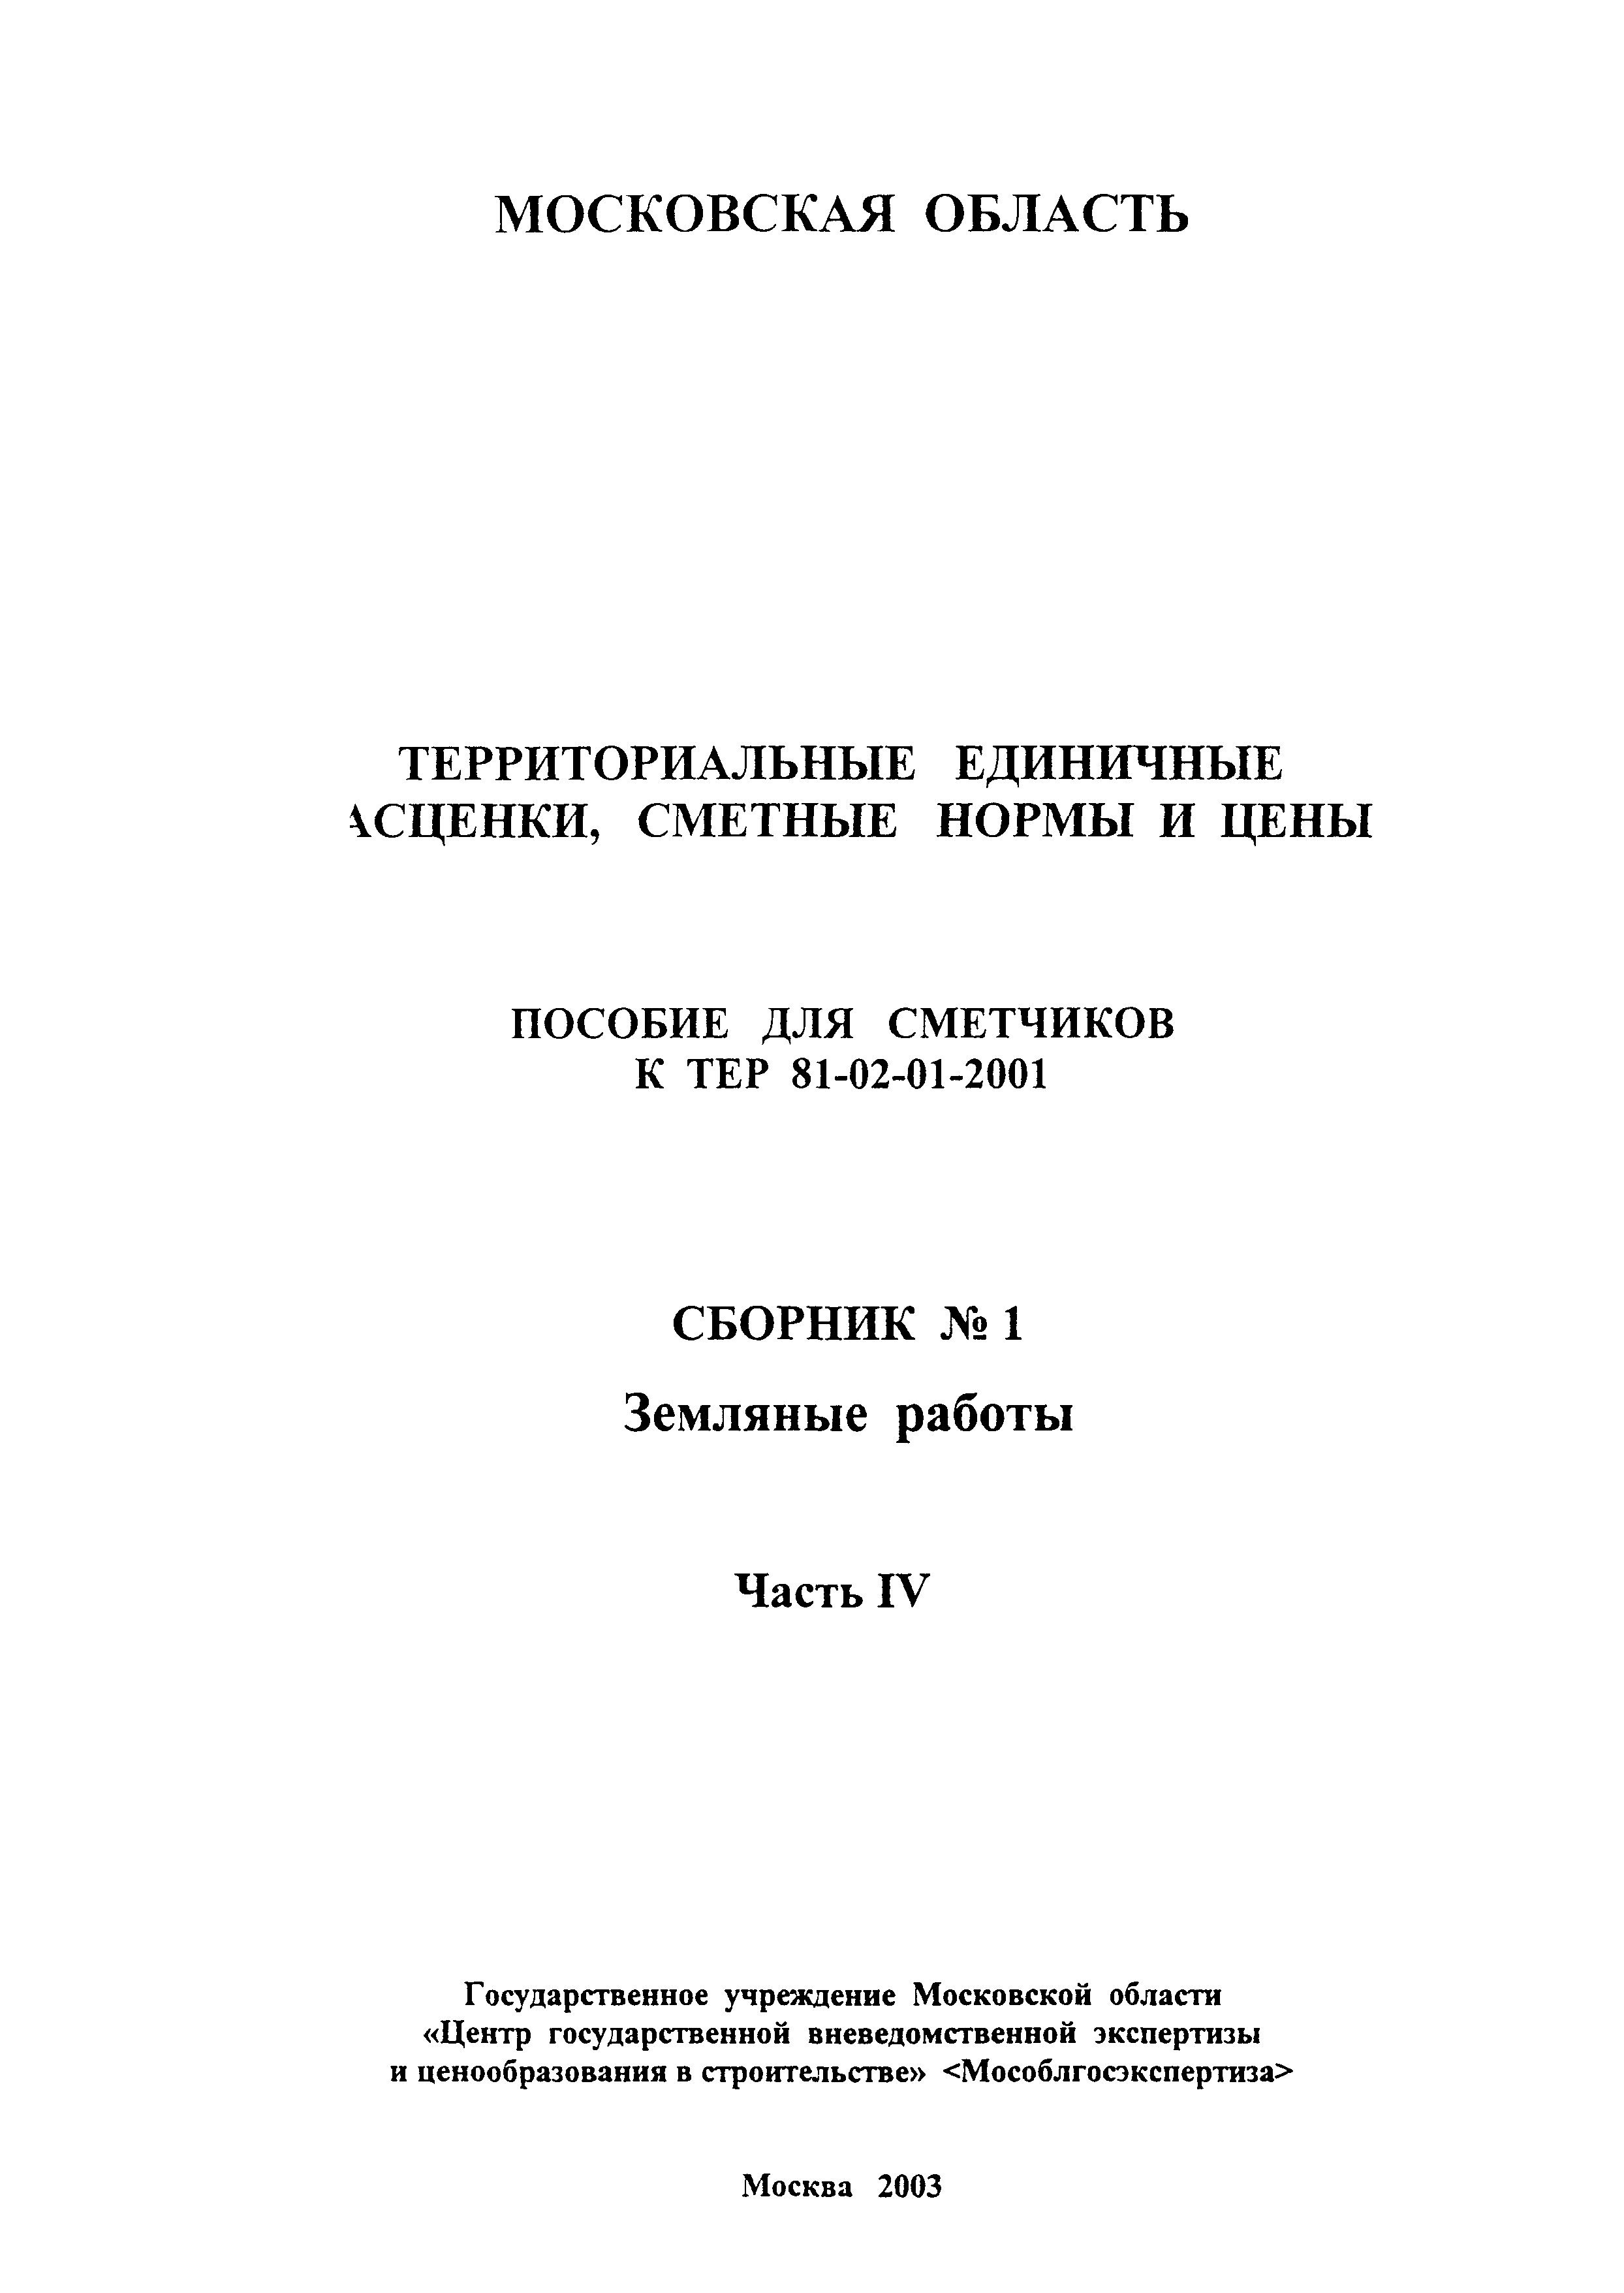 ГЭСНПиТЕР 2001-01 (IV)